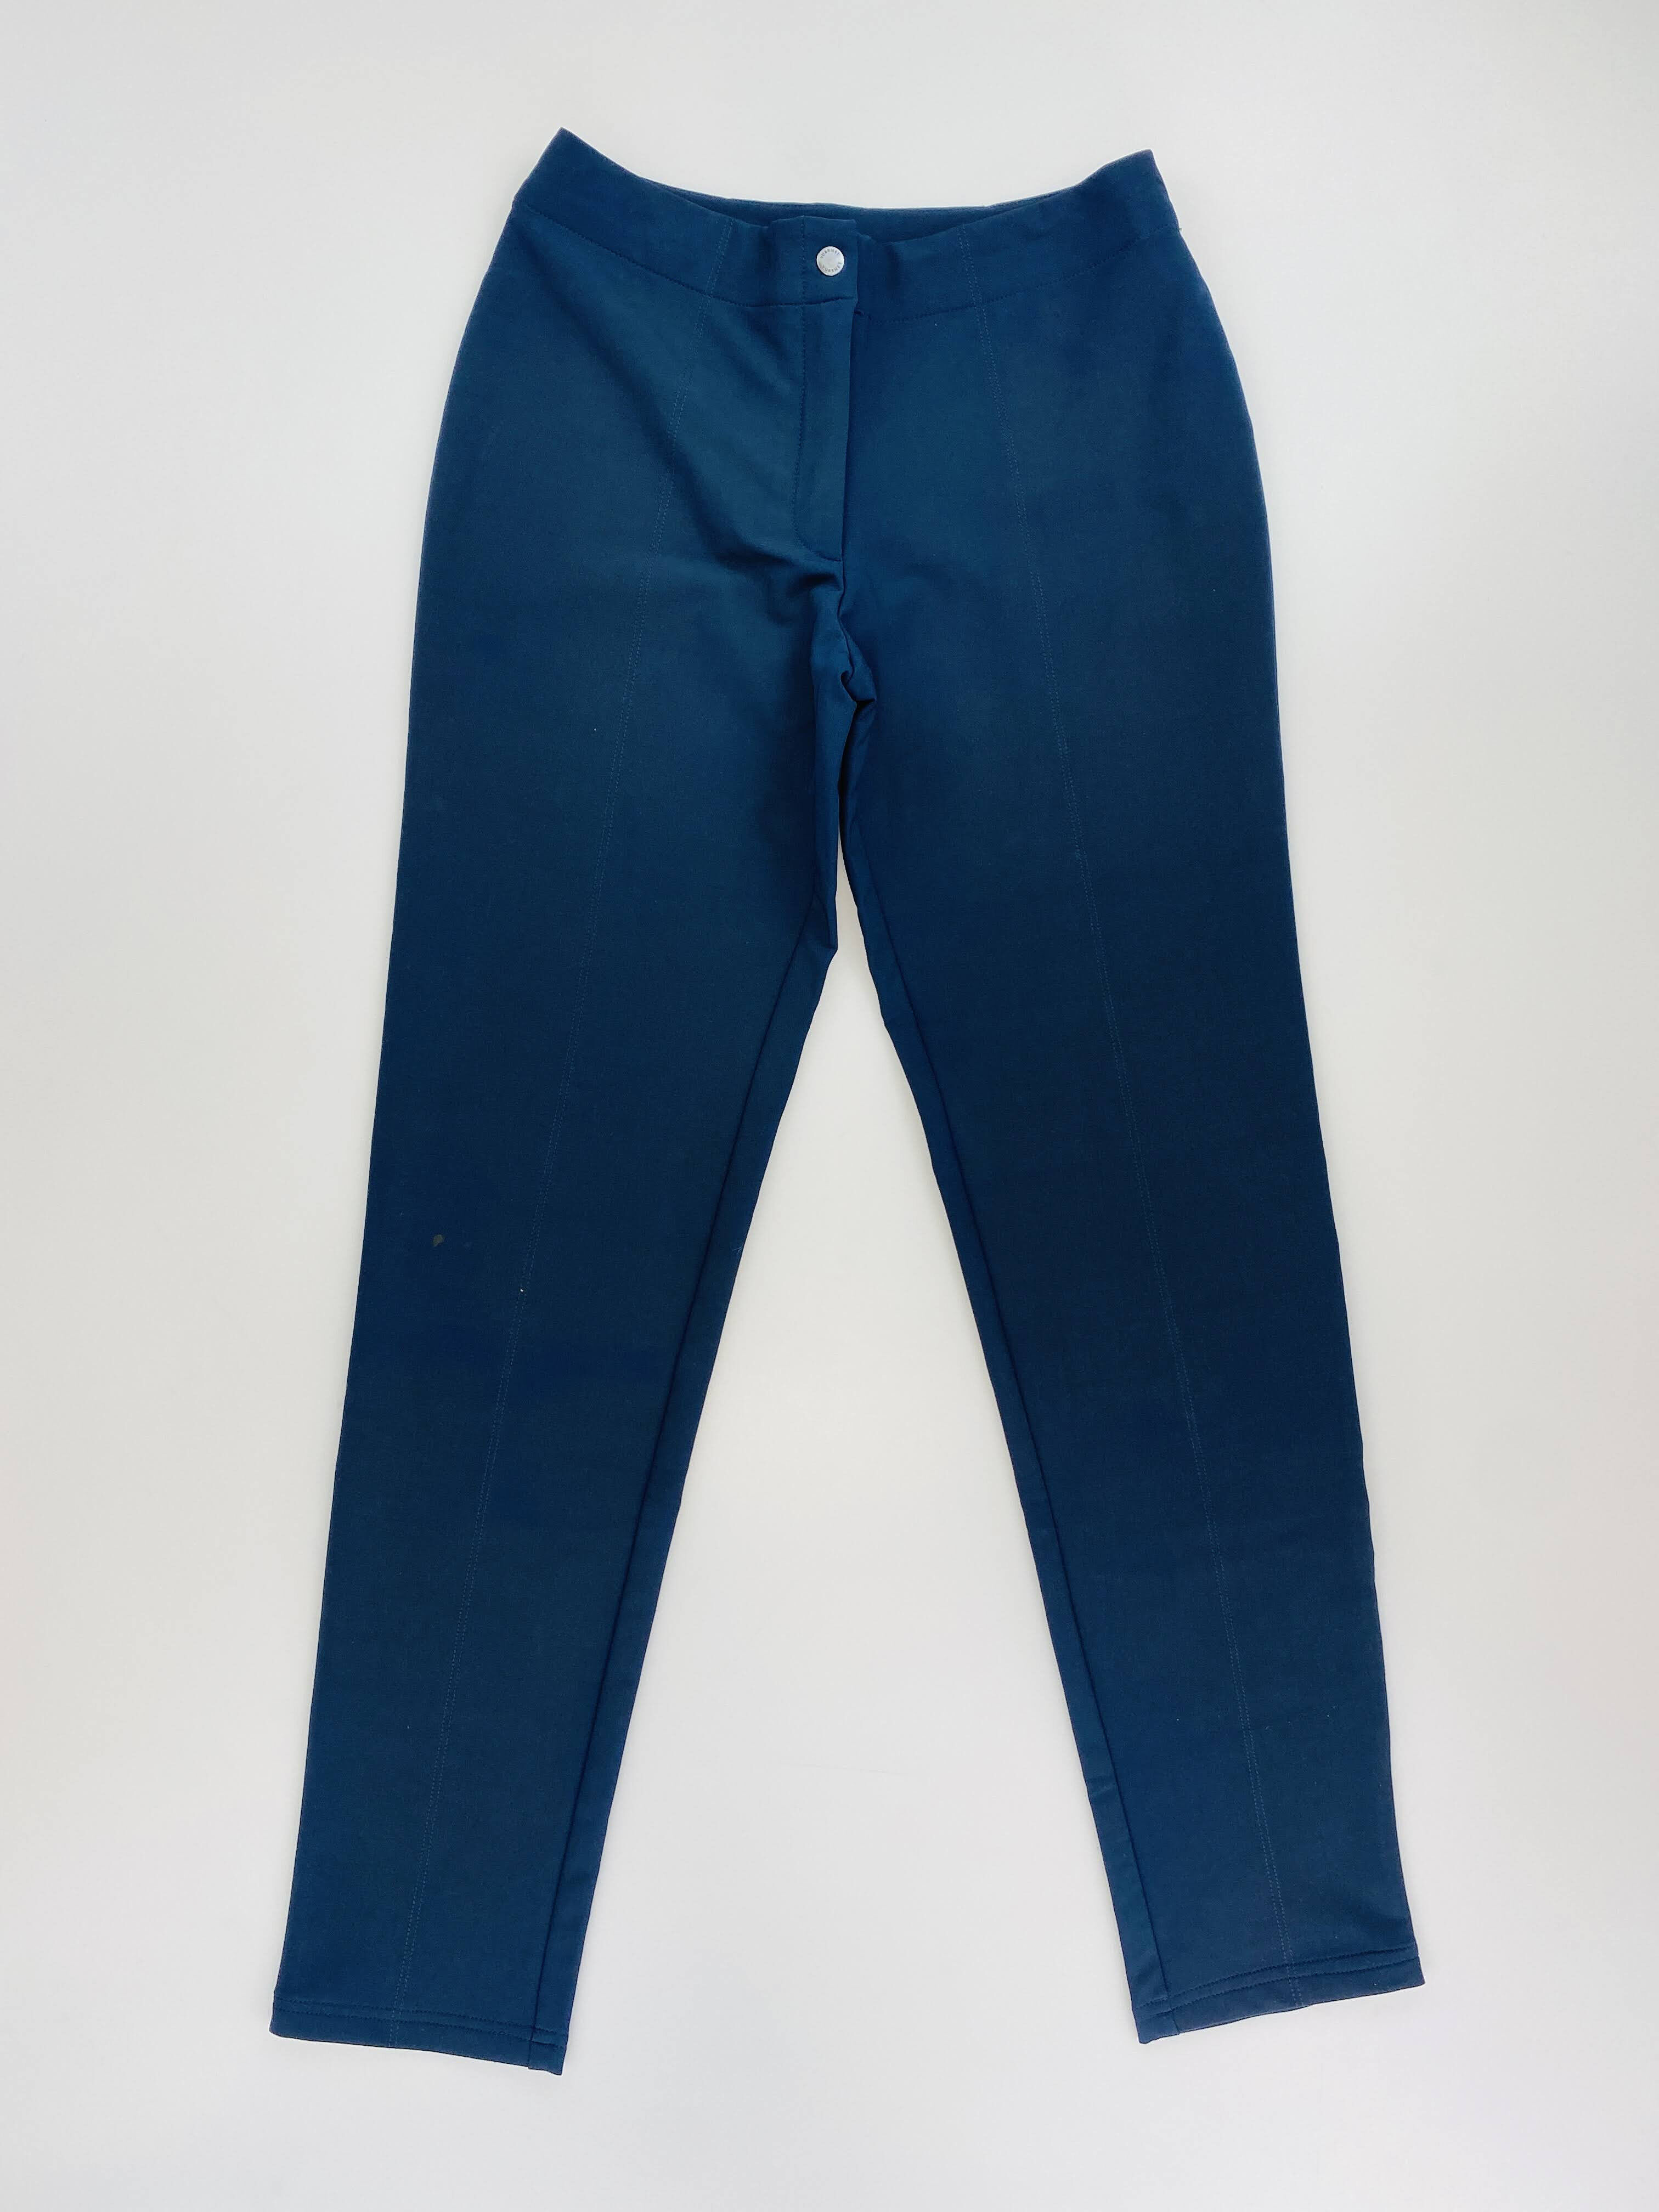 Vuarnet Baltico Pant - Second Hand Trousers - Women's - Blue - S | Hardloop